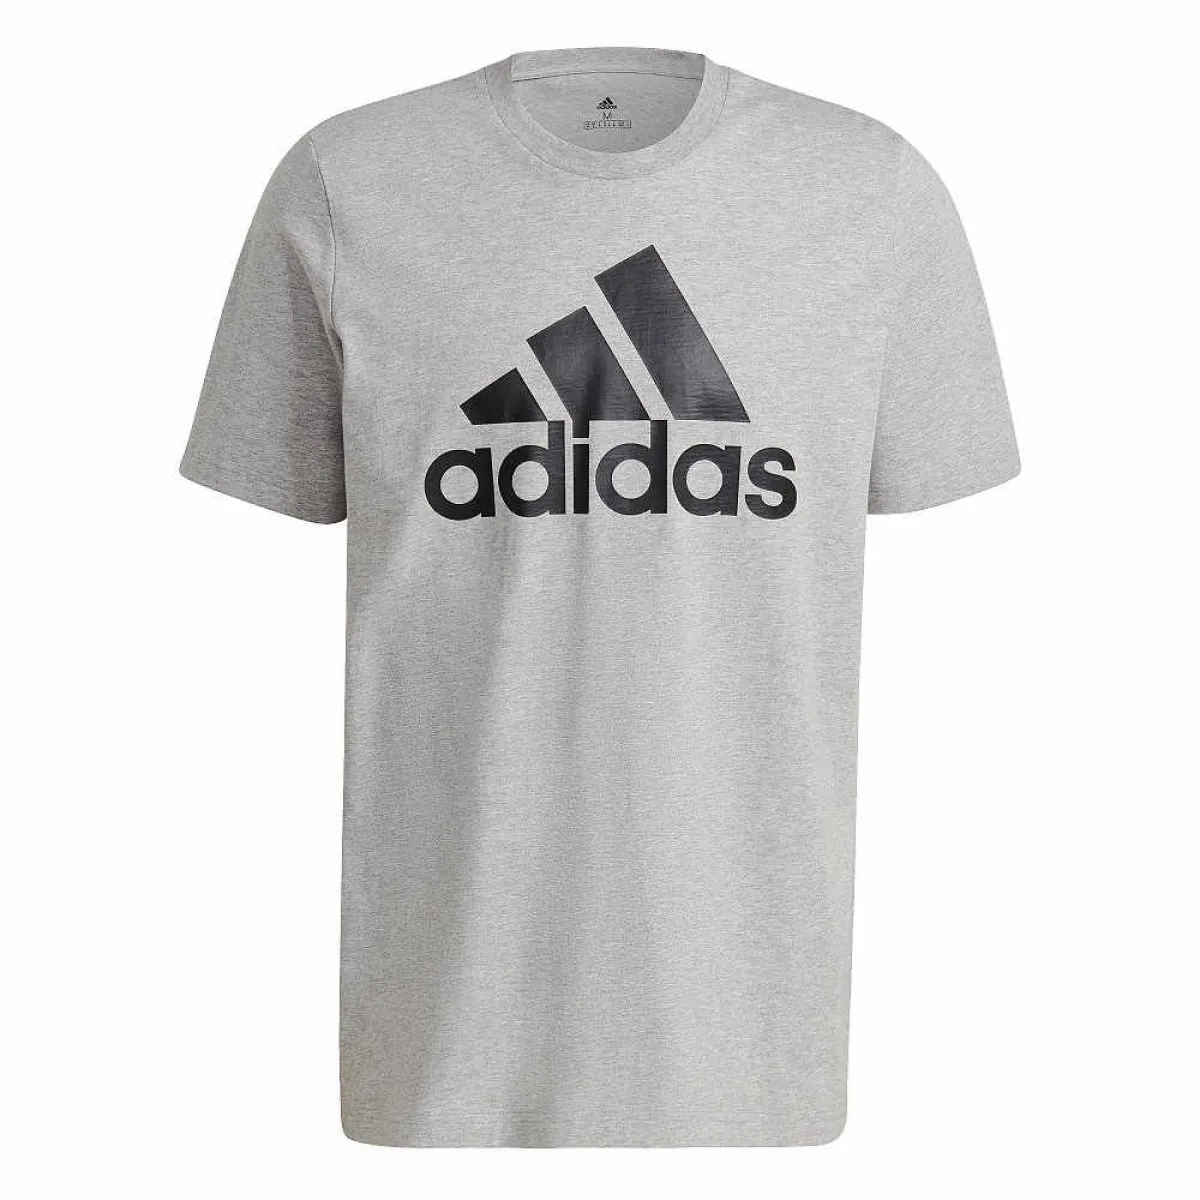 adidas Men s T-Shirt BL grey